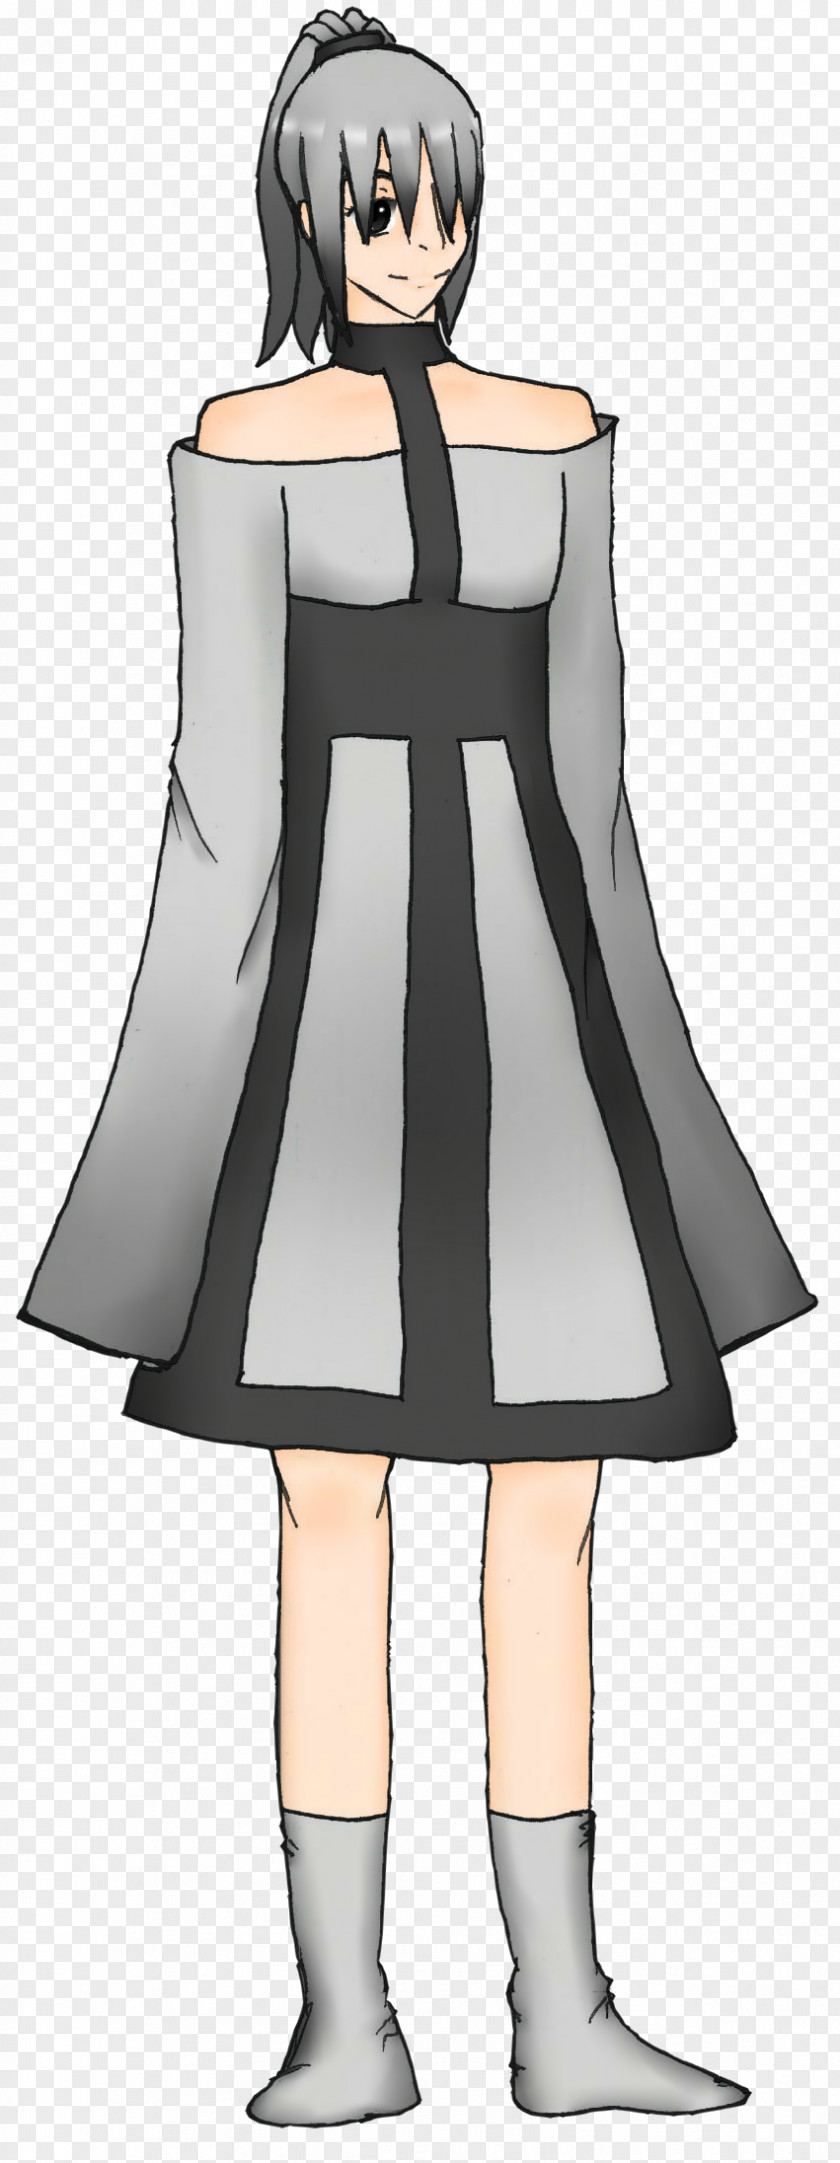 Dress Outerwear Cartoon Human Hair Color Uniform PNG